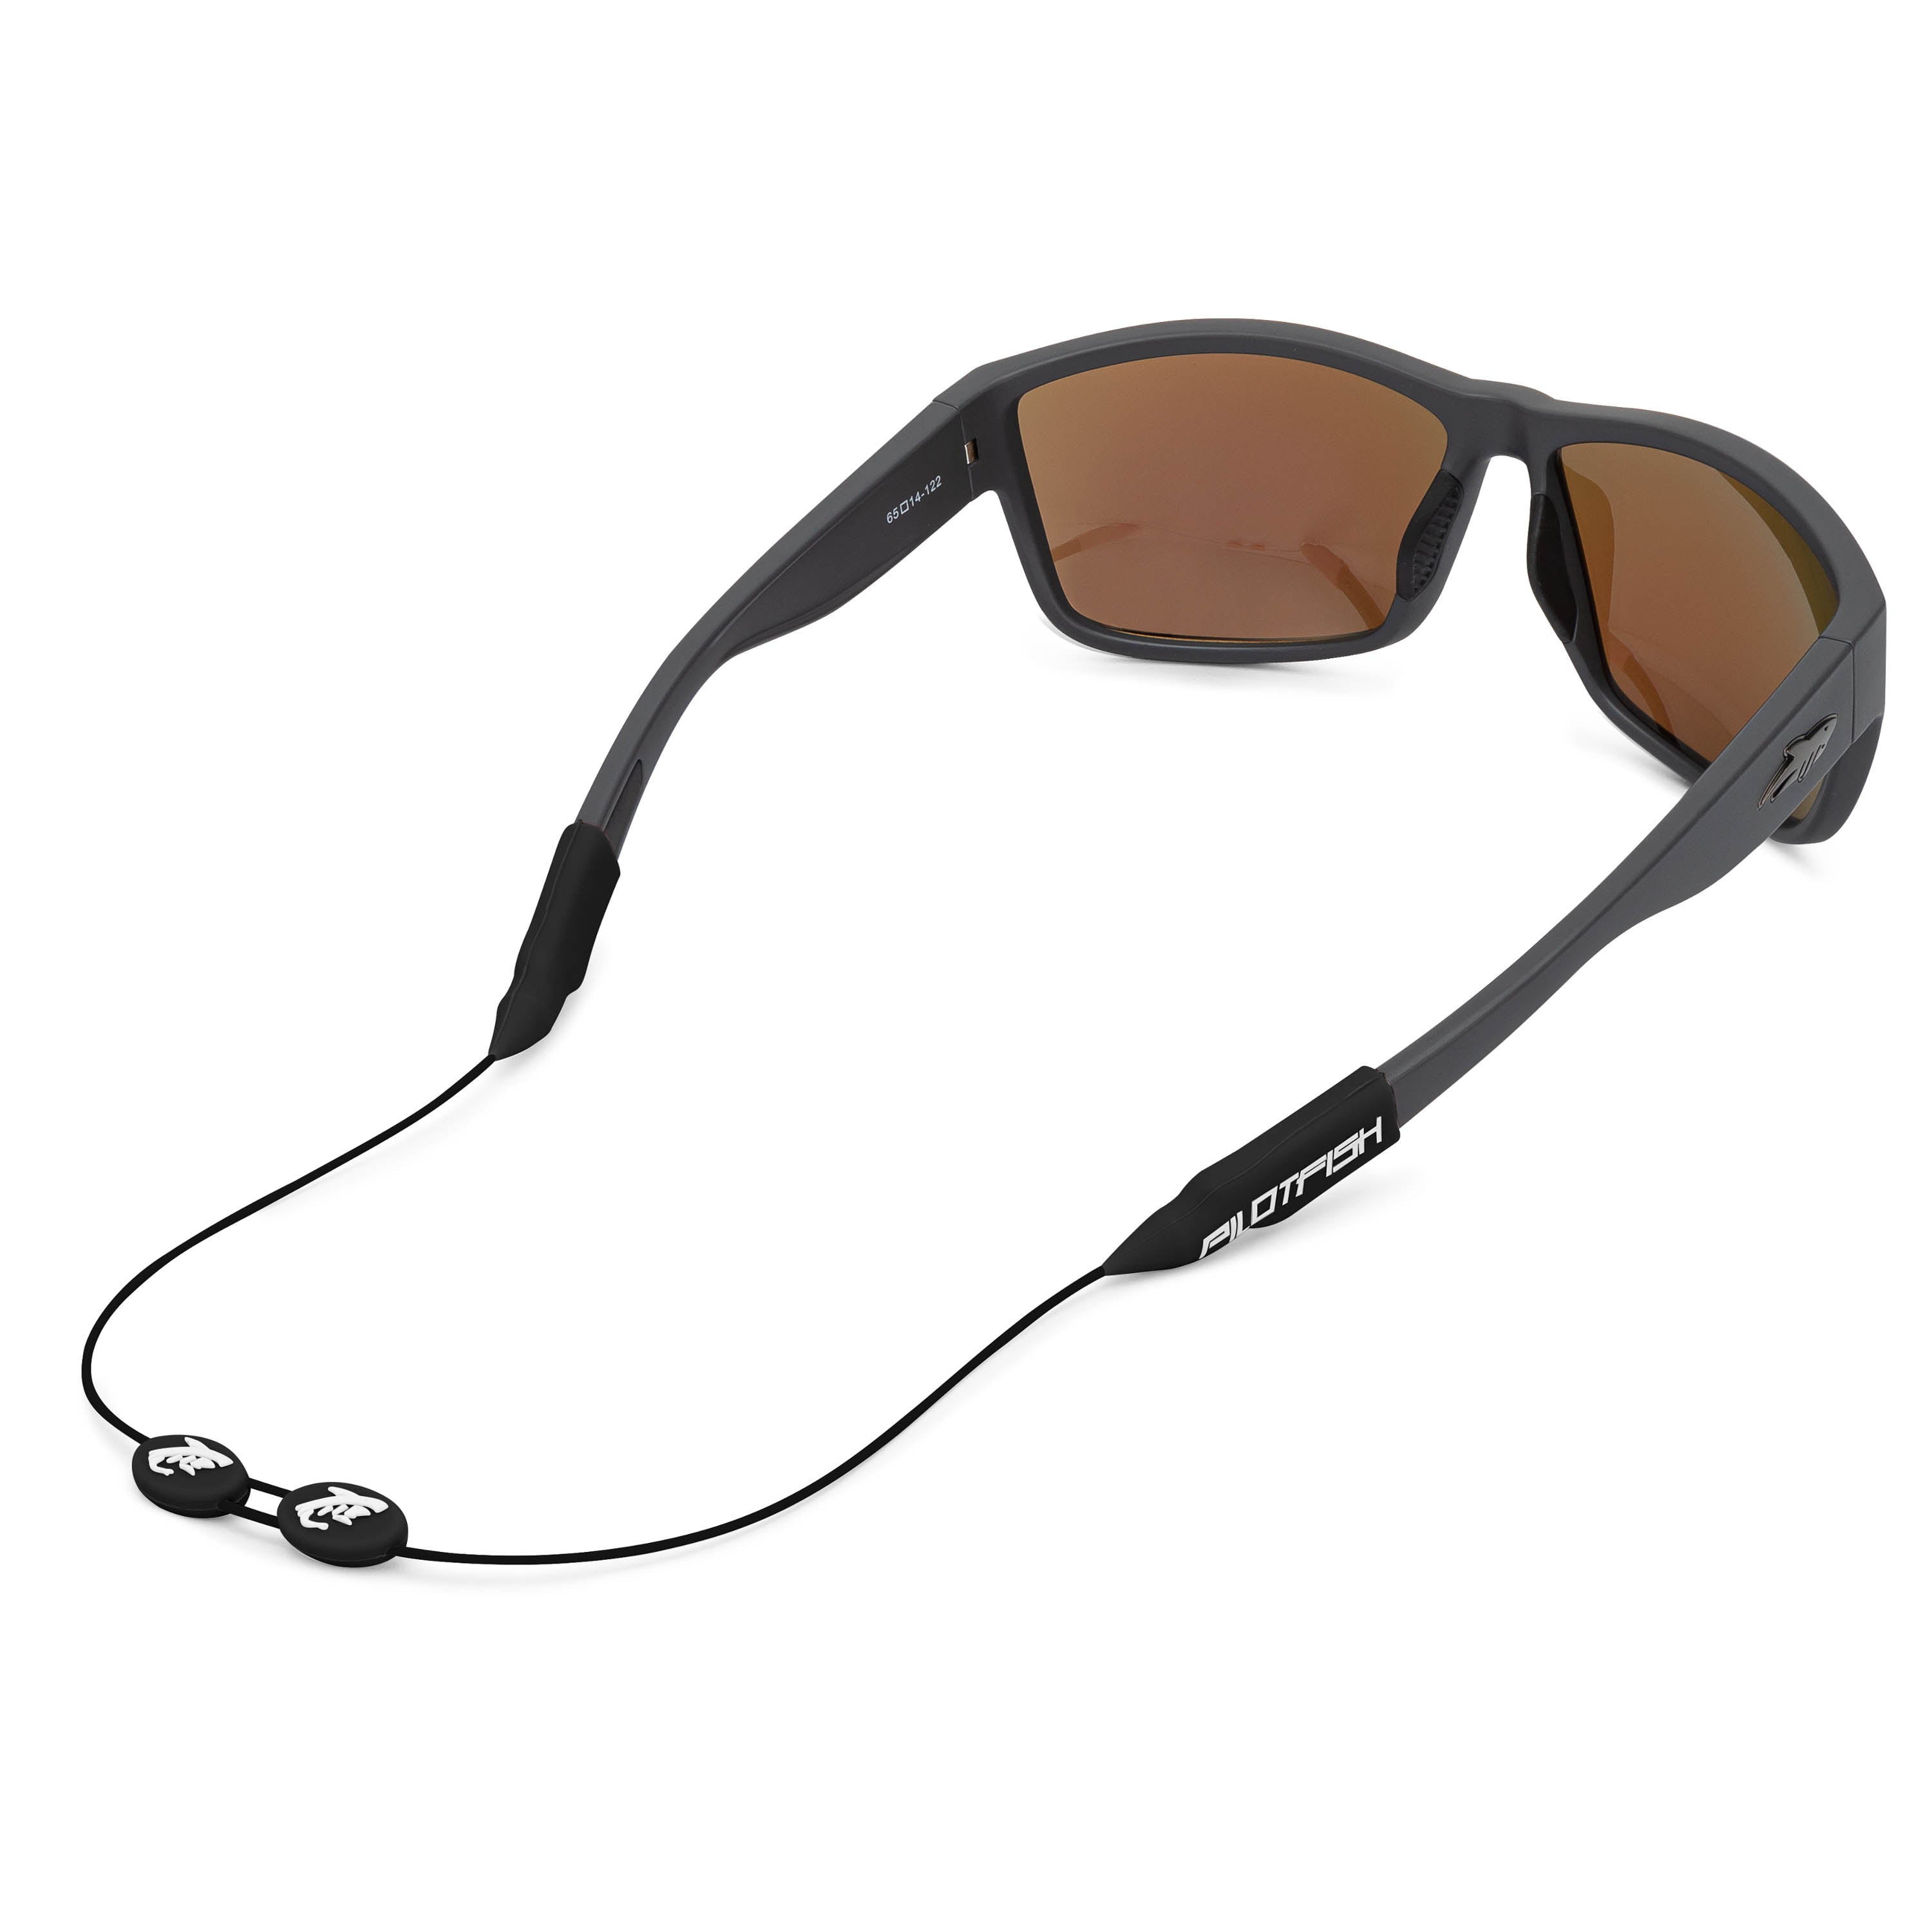 Pilotfish Eyewear Retainers | No-Tail Adjustable Sunglasses Straps